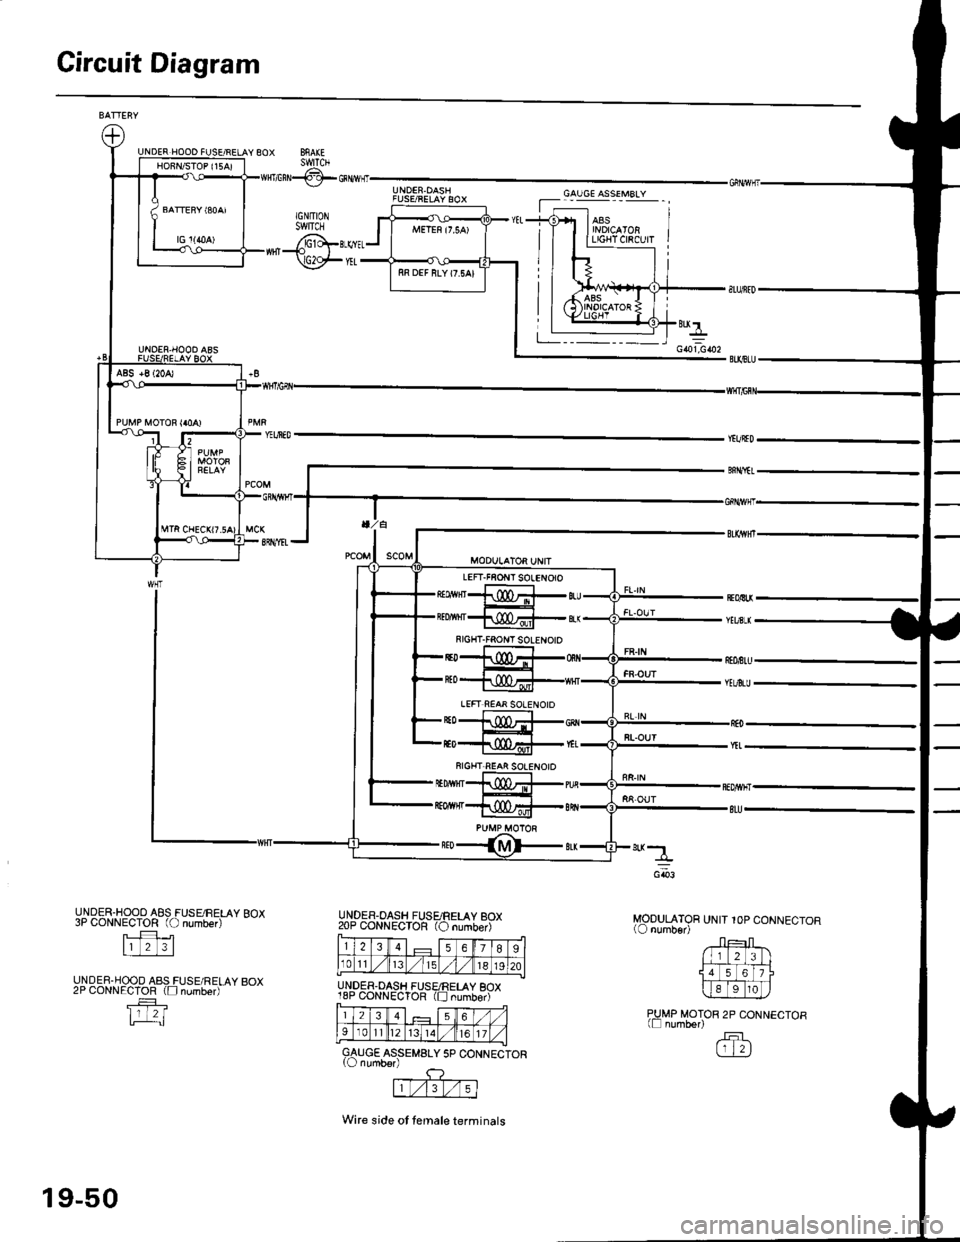 HONDA CIVIC 1999 6.G Workshop Manual Gircuit Diagram
MOOULATOR UNIT IOP CONNECTOR
zrJrF!_lll 2 3ll
14TiEltl
c@4
PIMP MOTOR 2P CONNECTOR(Ll number)fFlGTN
UNDER.HOOO A8S FUSE,/FELAY BOX3P CONNECTOR (O number)
| 2 3l
UNDER.HOOD AAS FUSE/REL